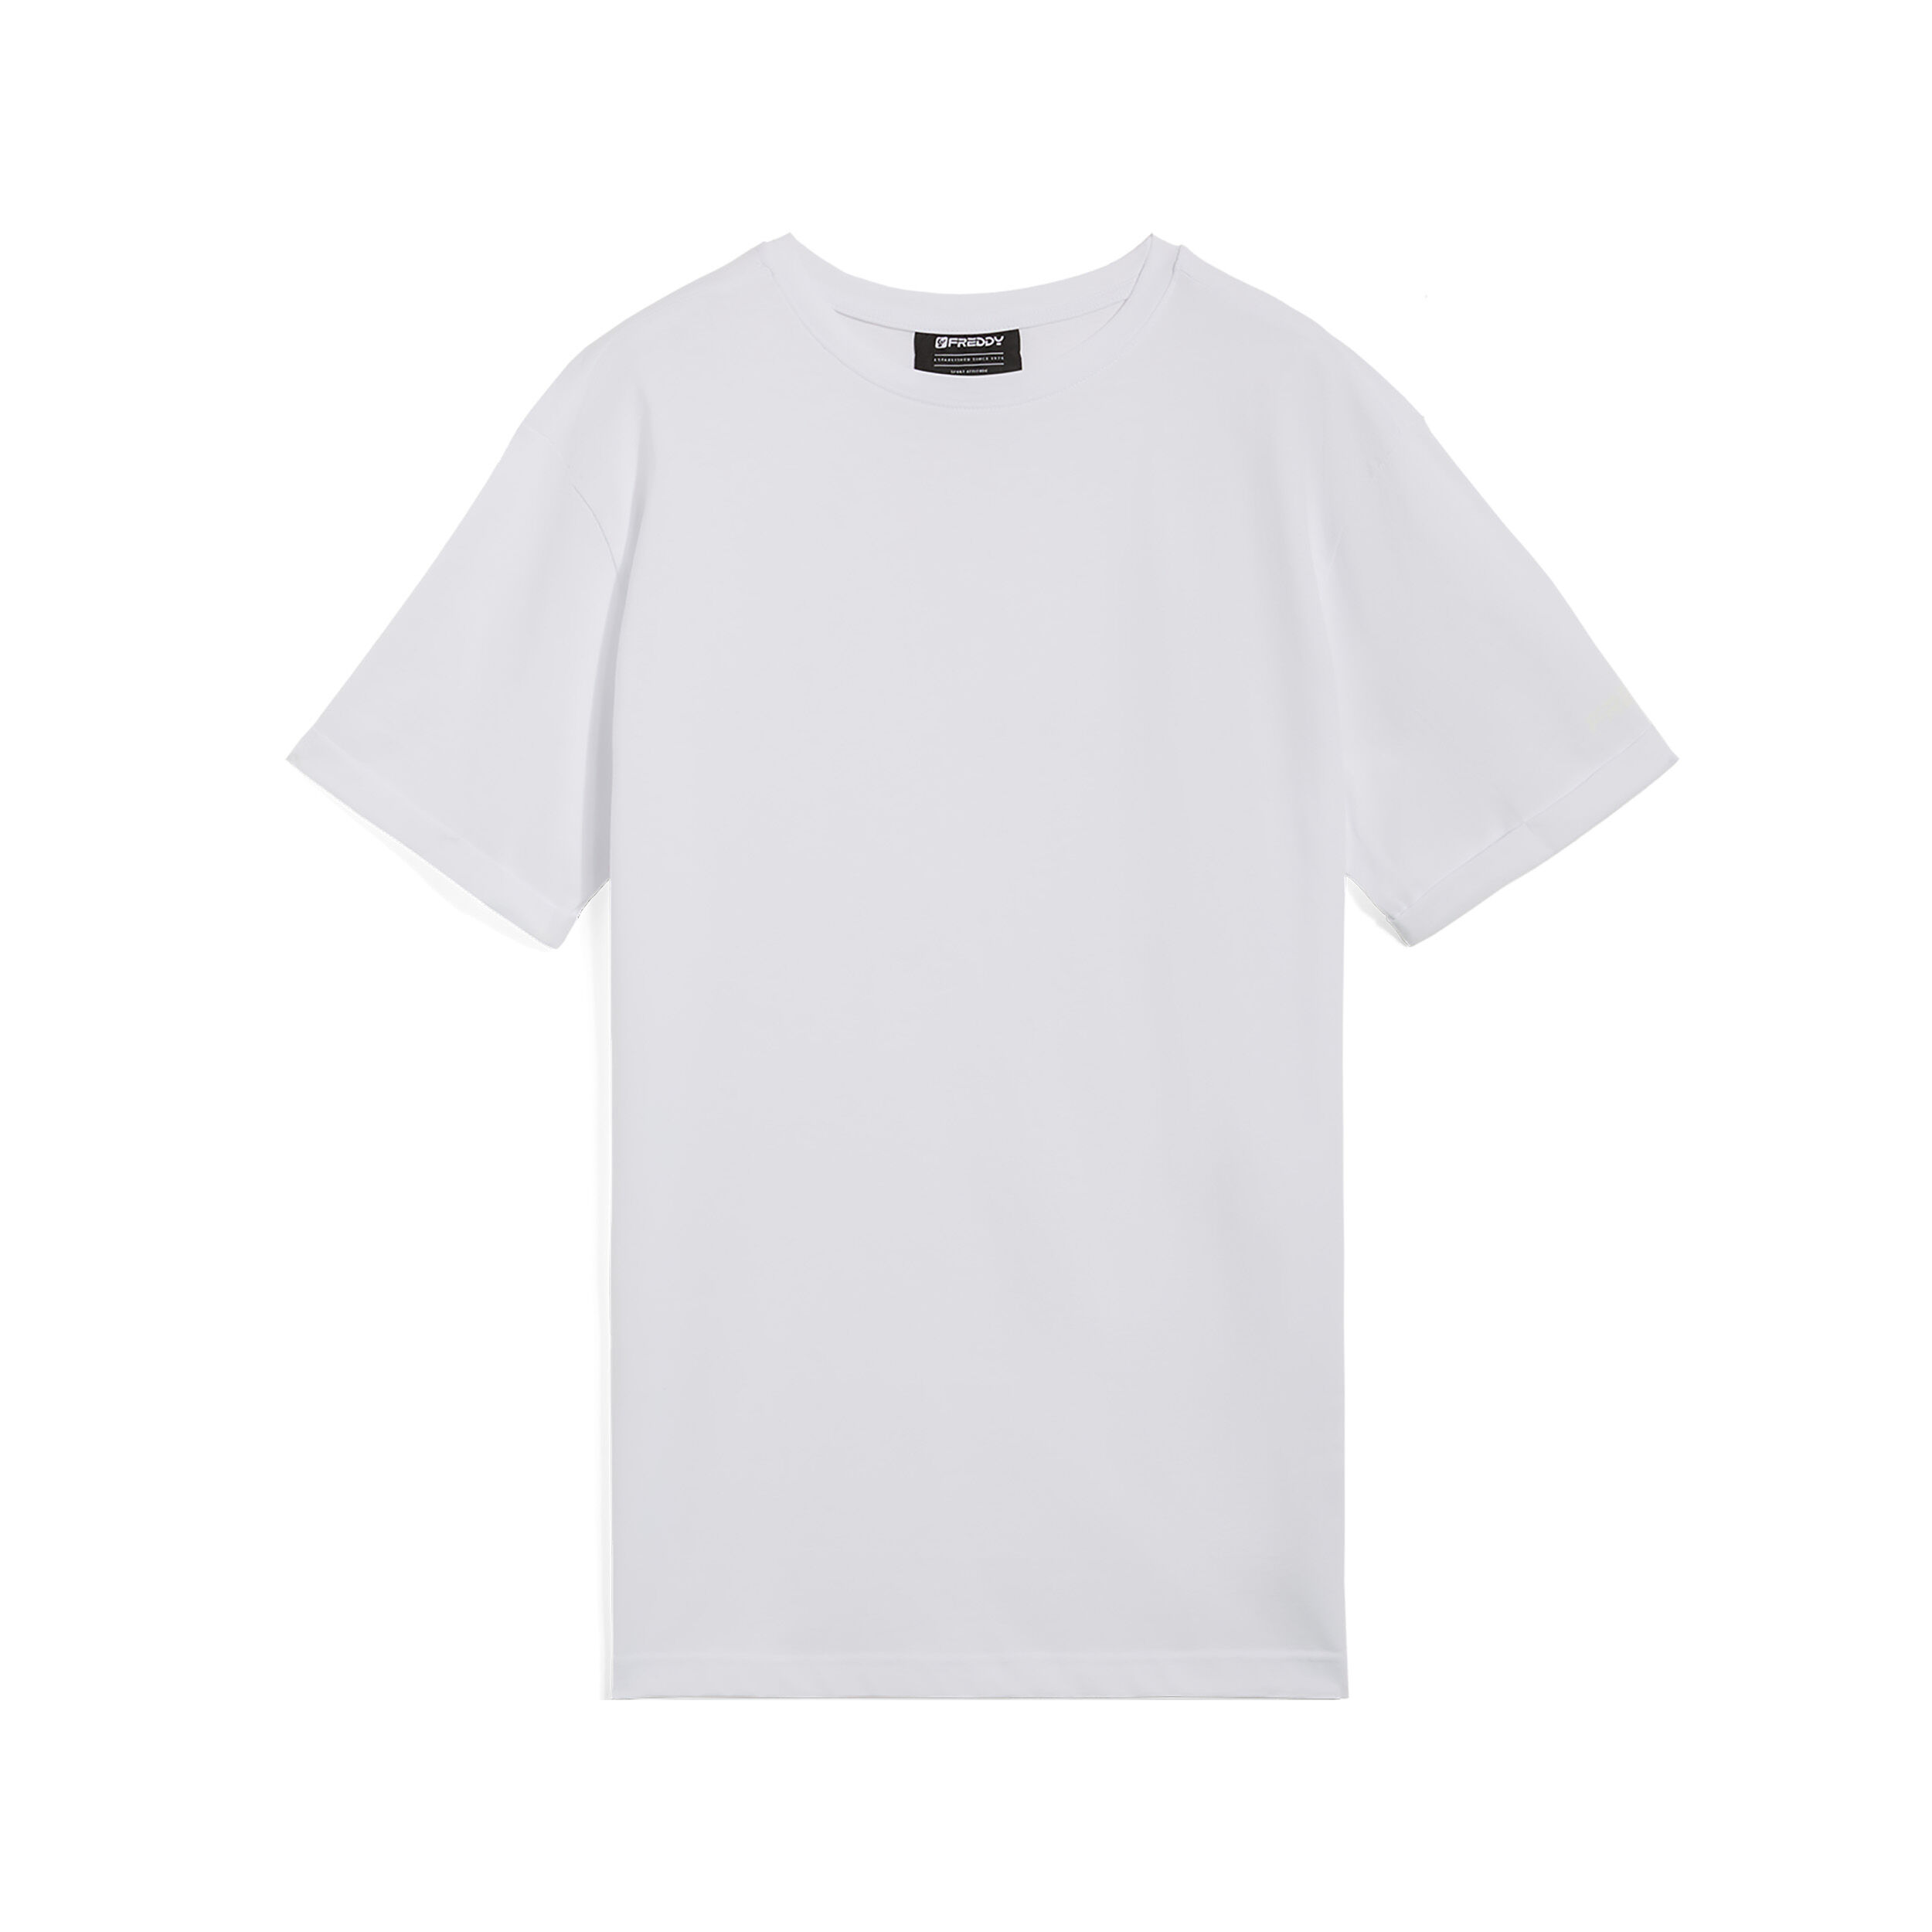 Freddy T-shirt da uomo design essenziale in cotone 100% Bianco Uomo Extra Large